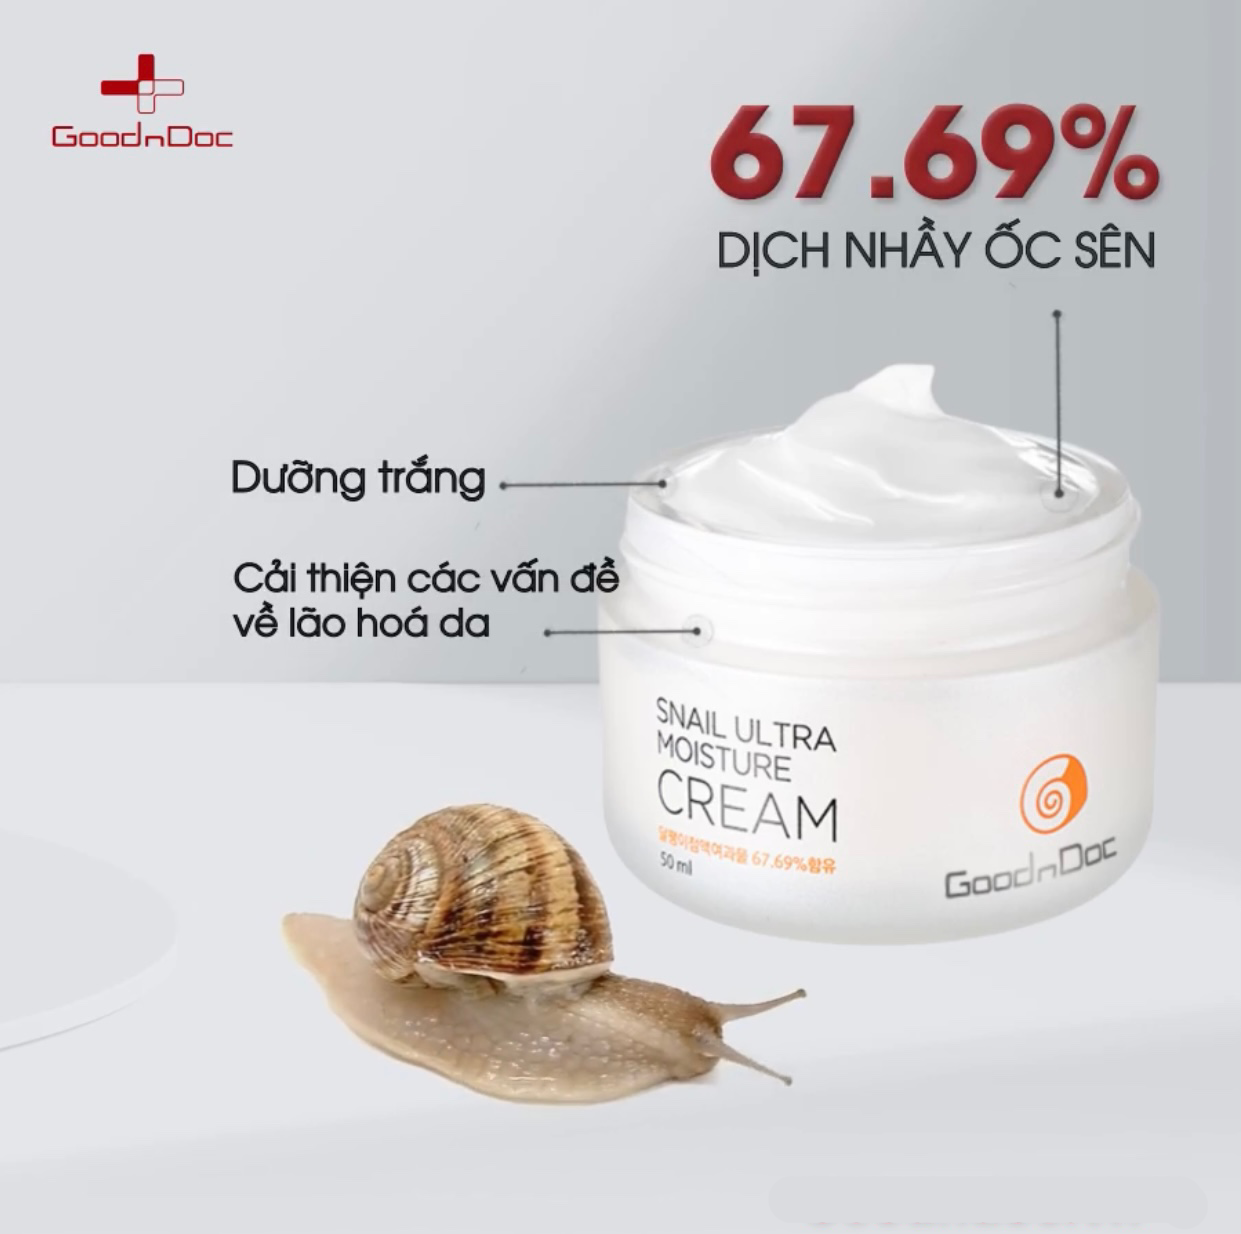 Kem dưỡng ẩm ốc sên GoodnDoc Snail Ultra Moisture Cream